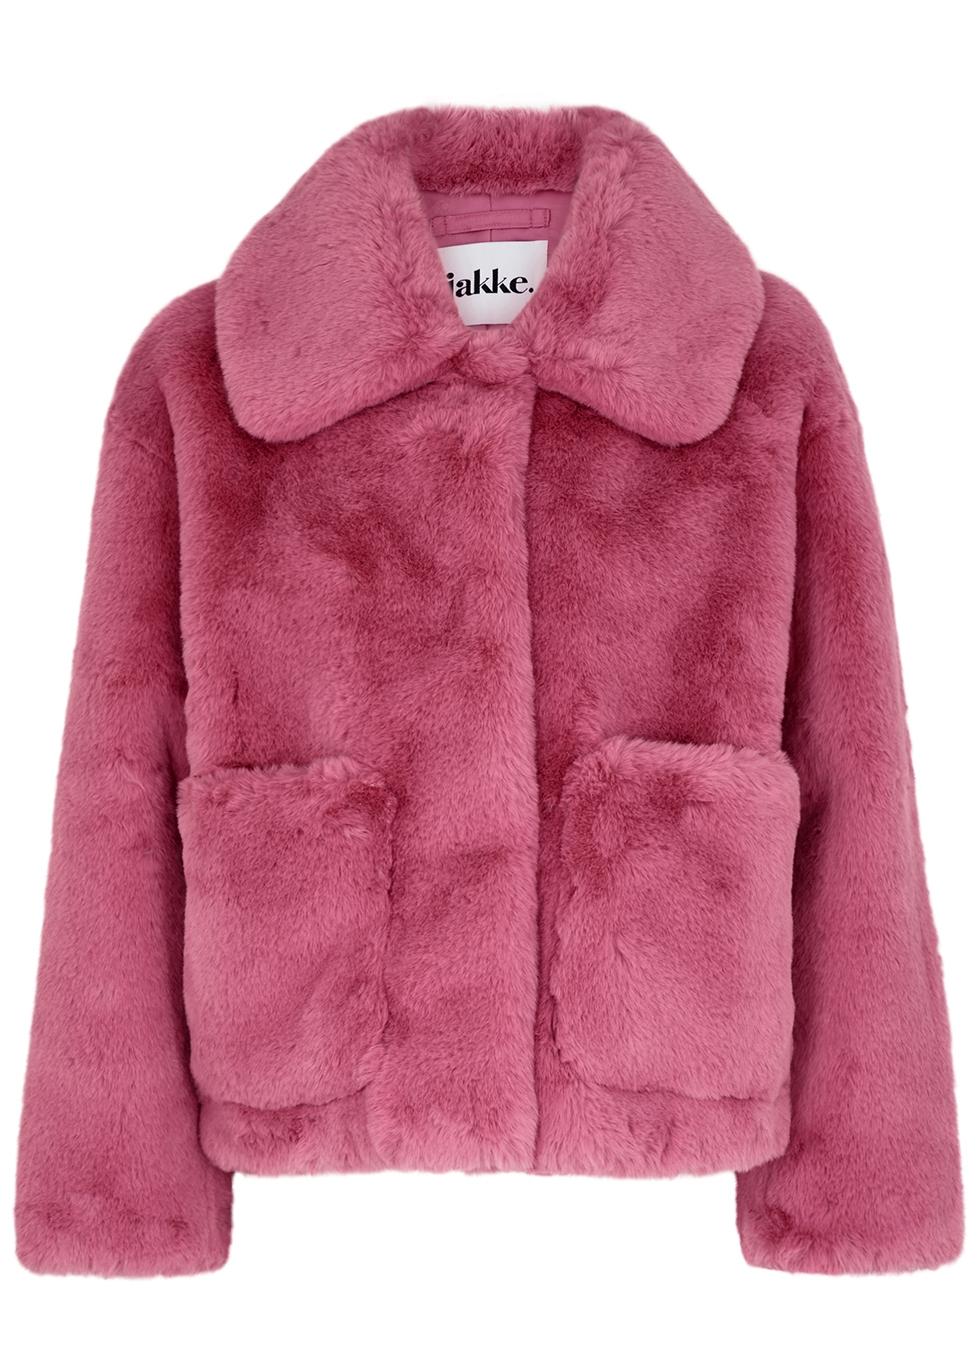 Jakke Traci Pink Faux Fur Coat | Lyst